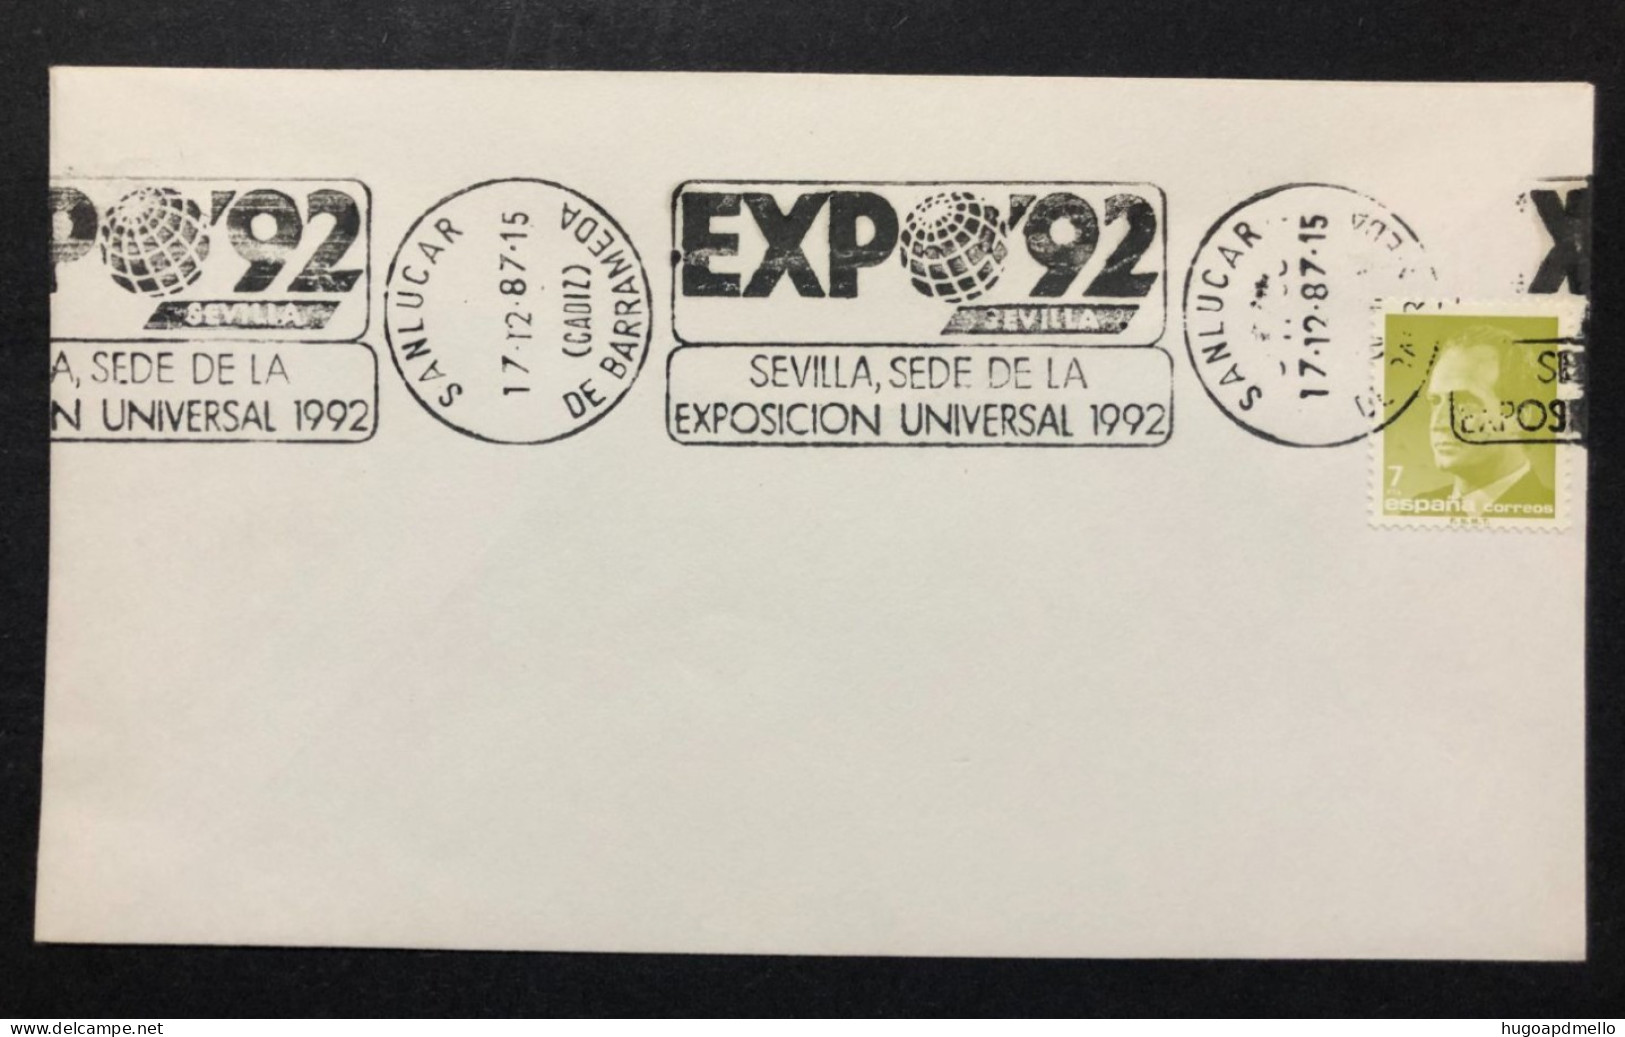 SPAIN, Cover With Special Cancellation « EXPO '92 », « SANLUCAR DE BARRAMEDA (Cadiz) Postmark », 1987 - 1992 – Séville (Espagne)